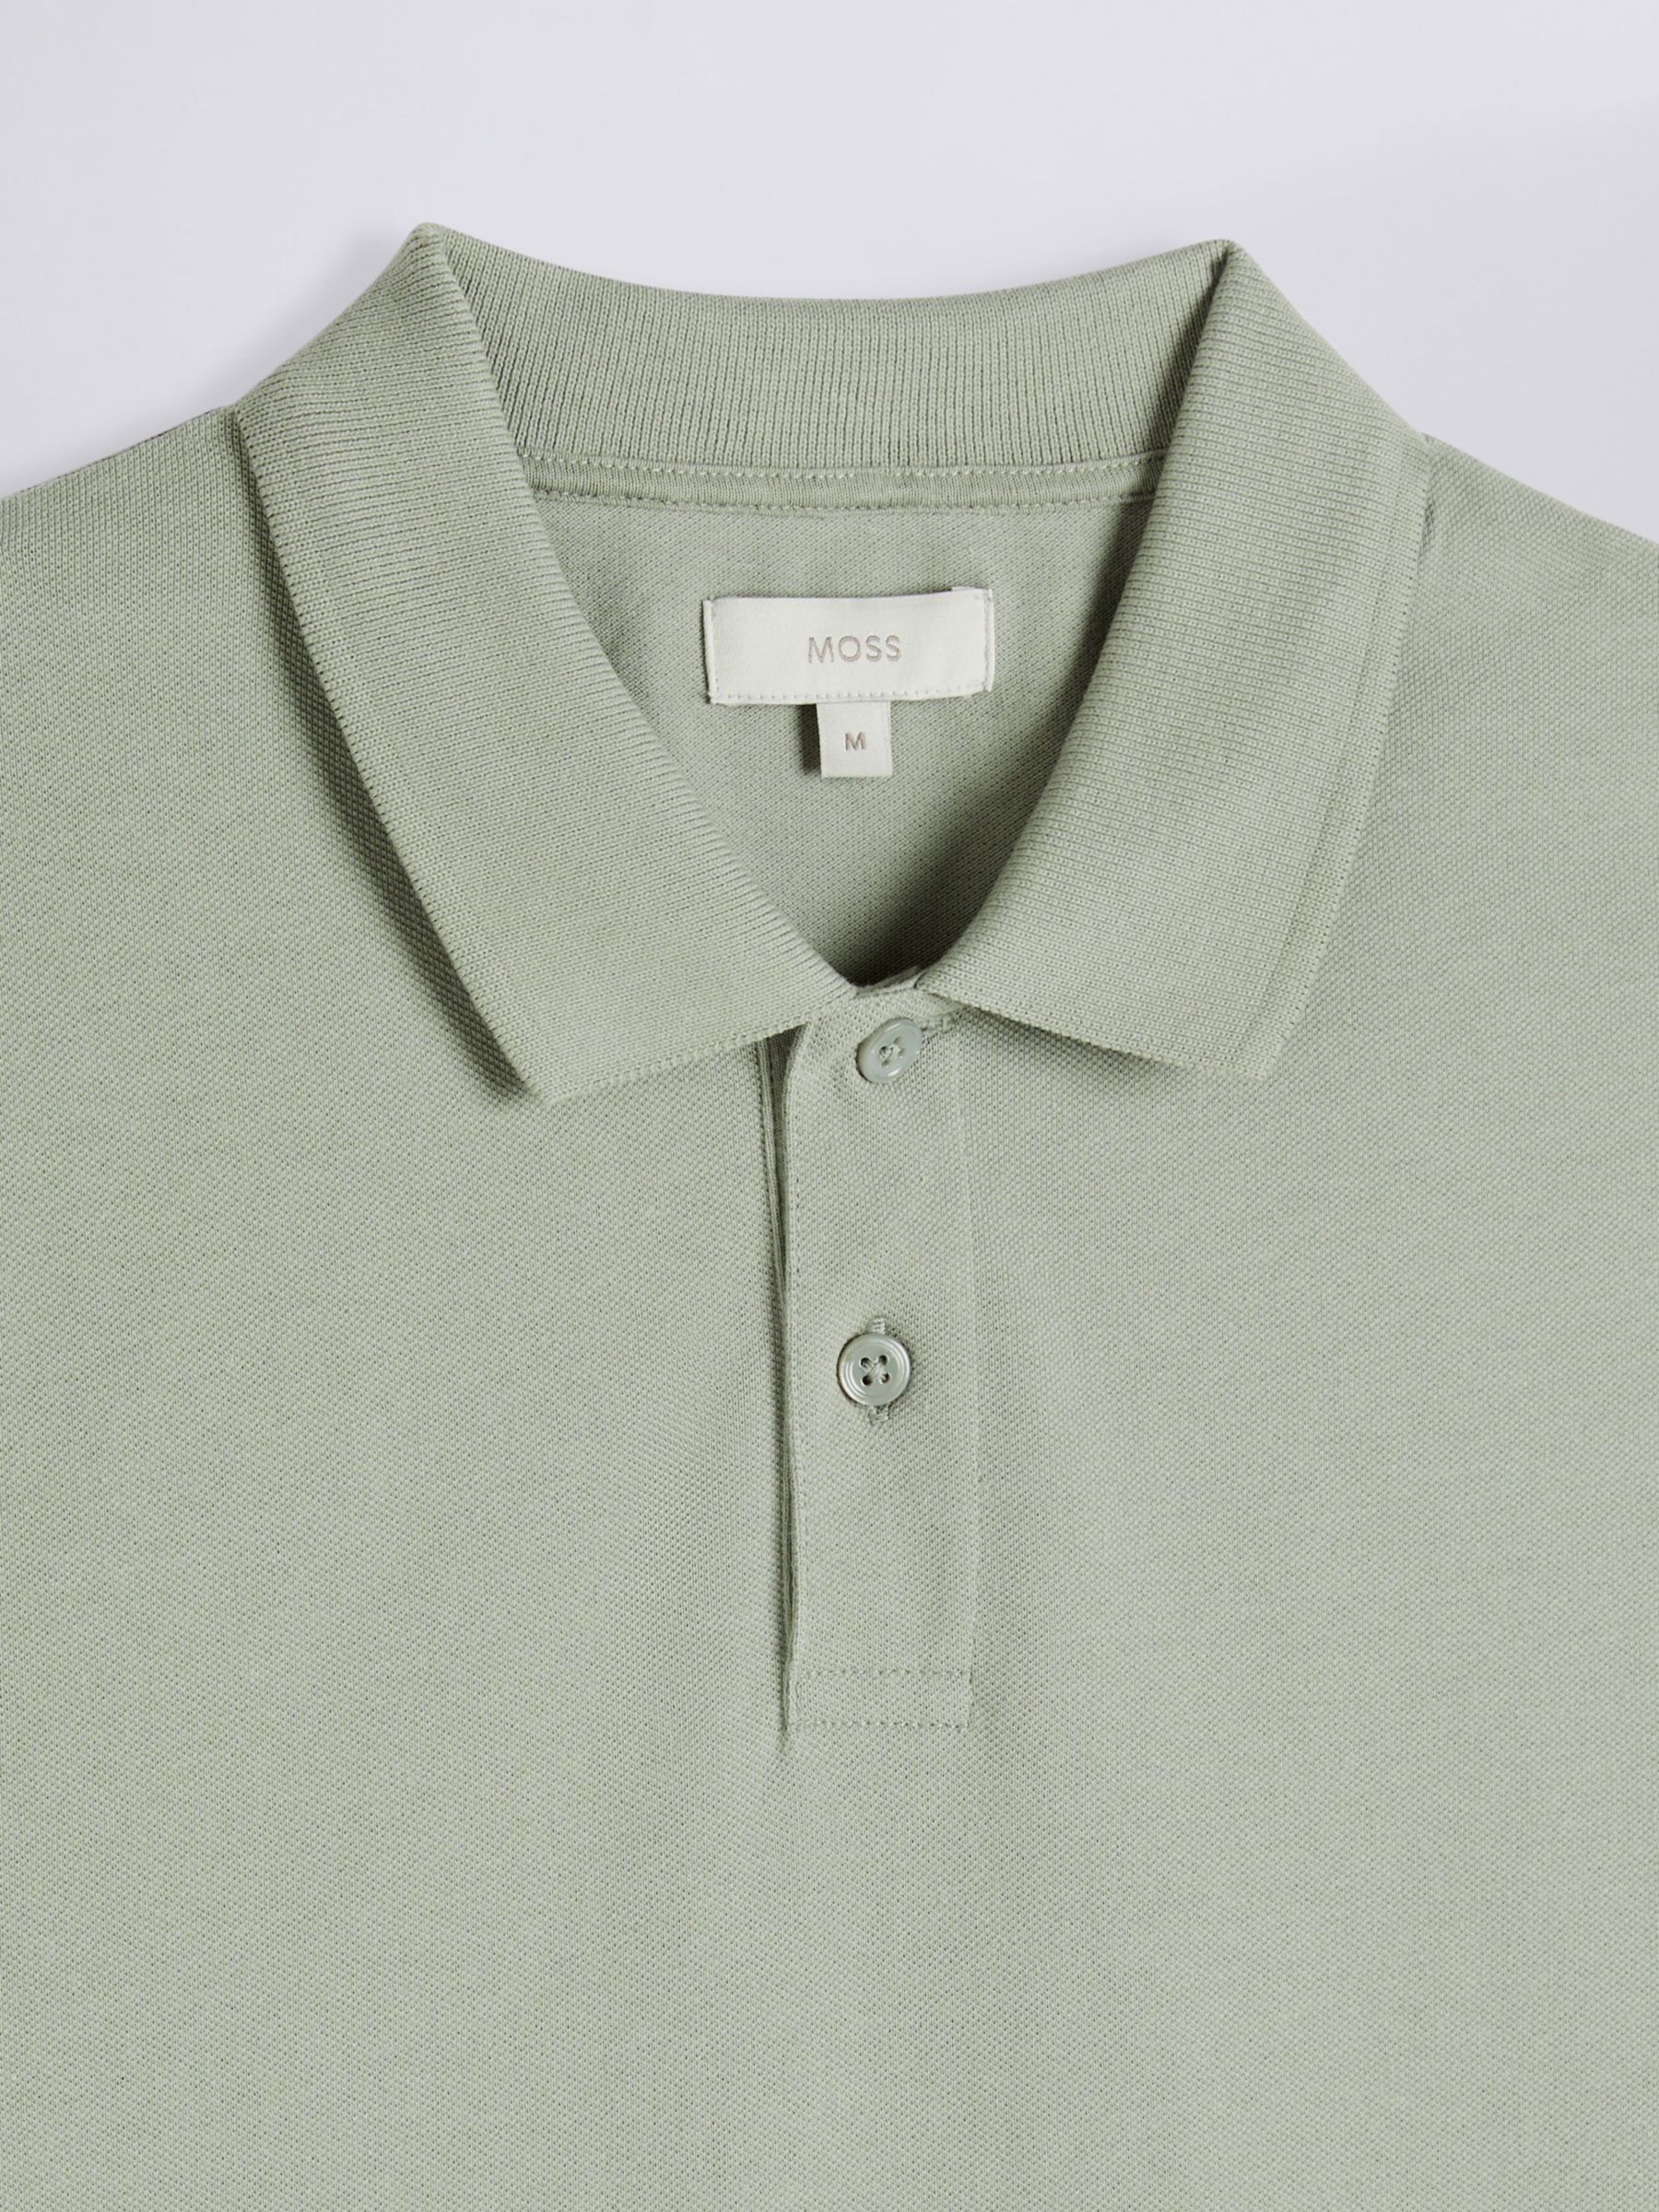 Moss Pique Short Sleeve Polo Shirt, Sage at John Lewis & Partners